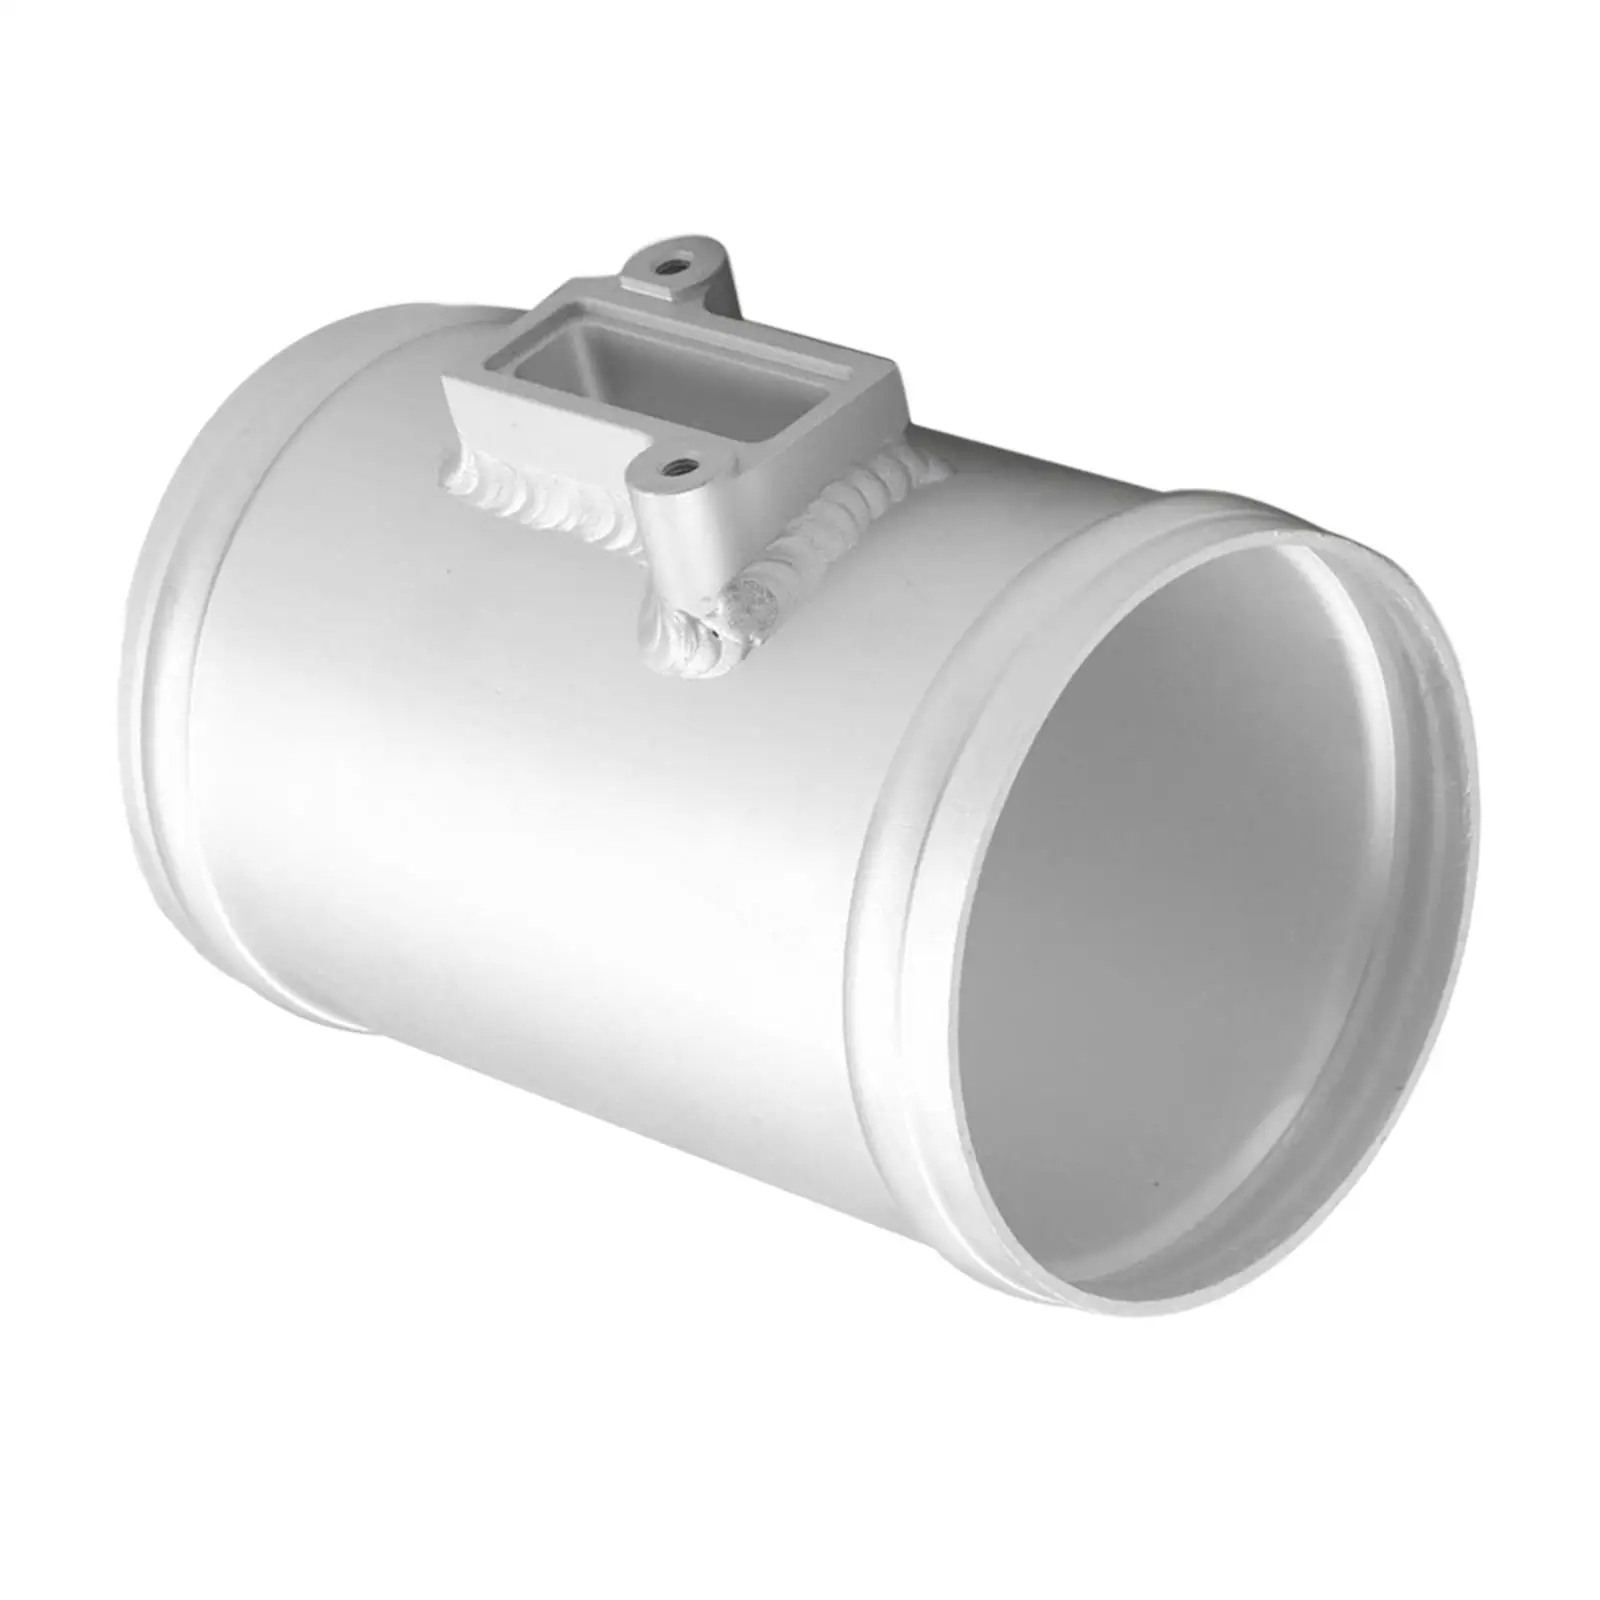 Maf air Flow Sensor Adapter Tube Universal Replacement Air Intake Meter Mount